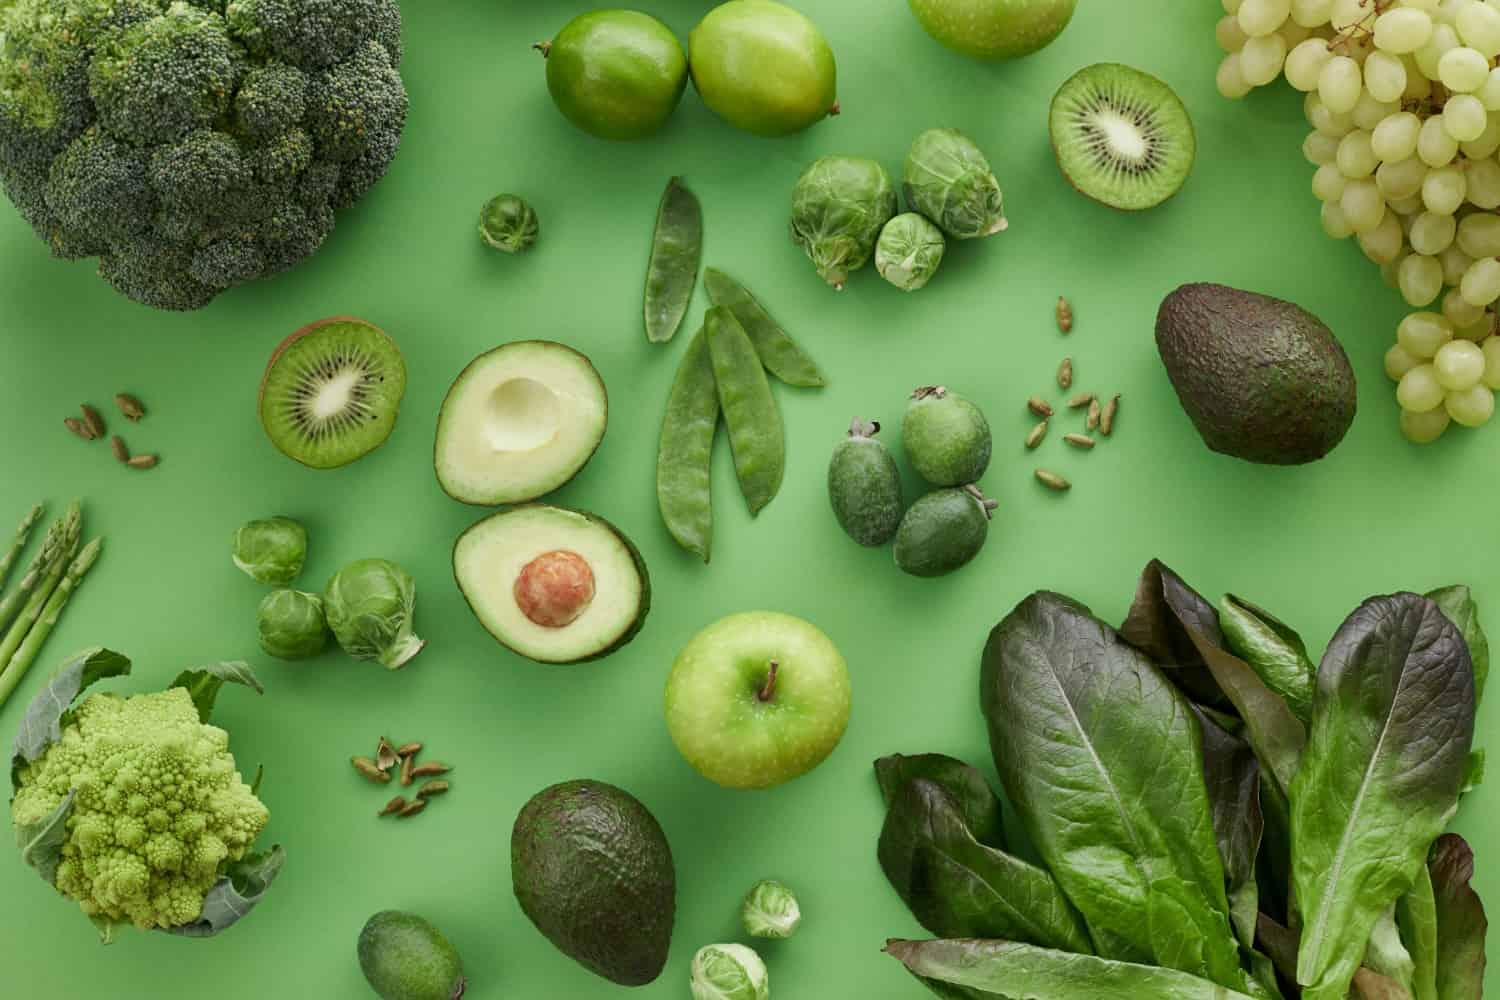 Various green vegetables